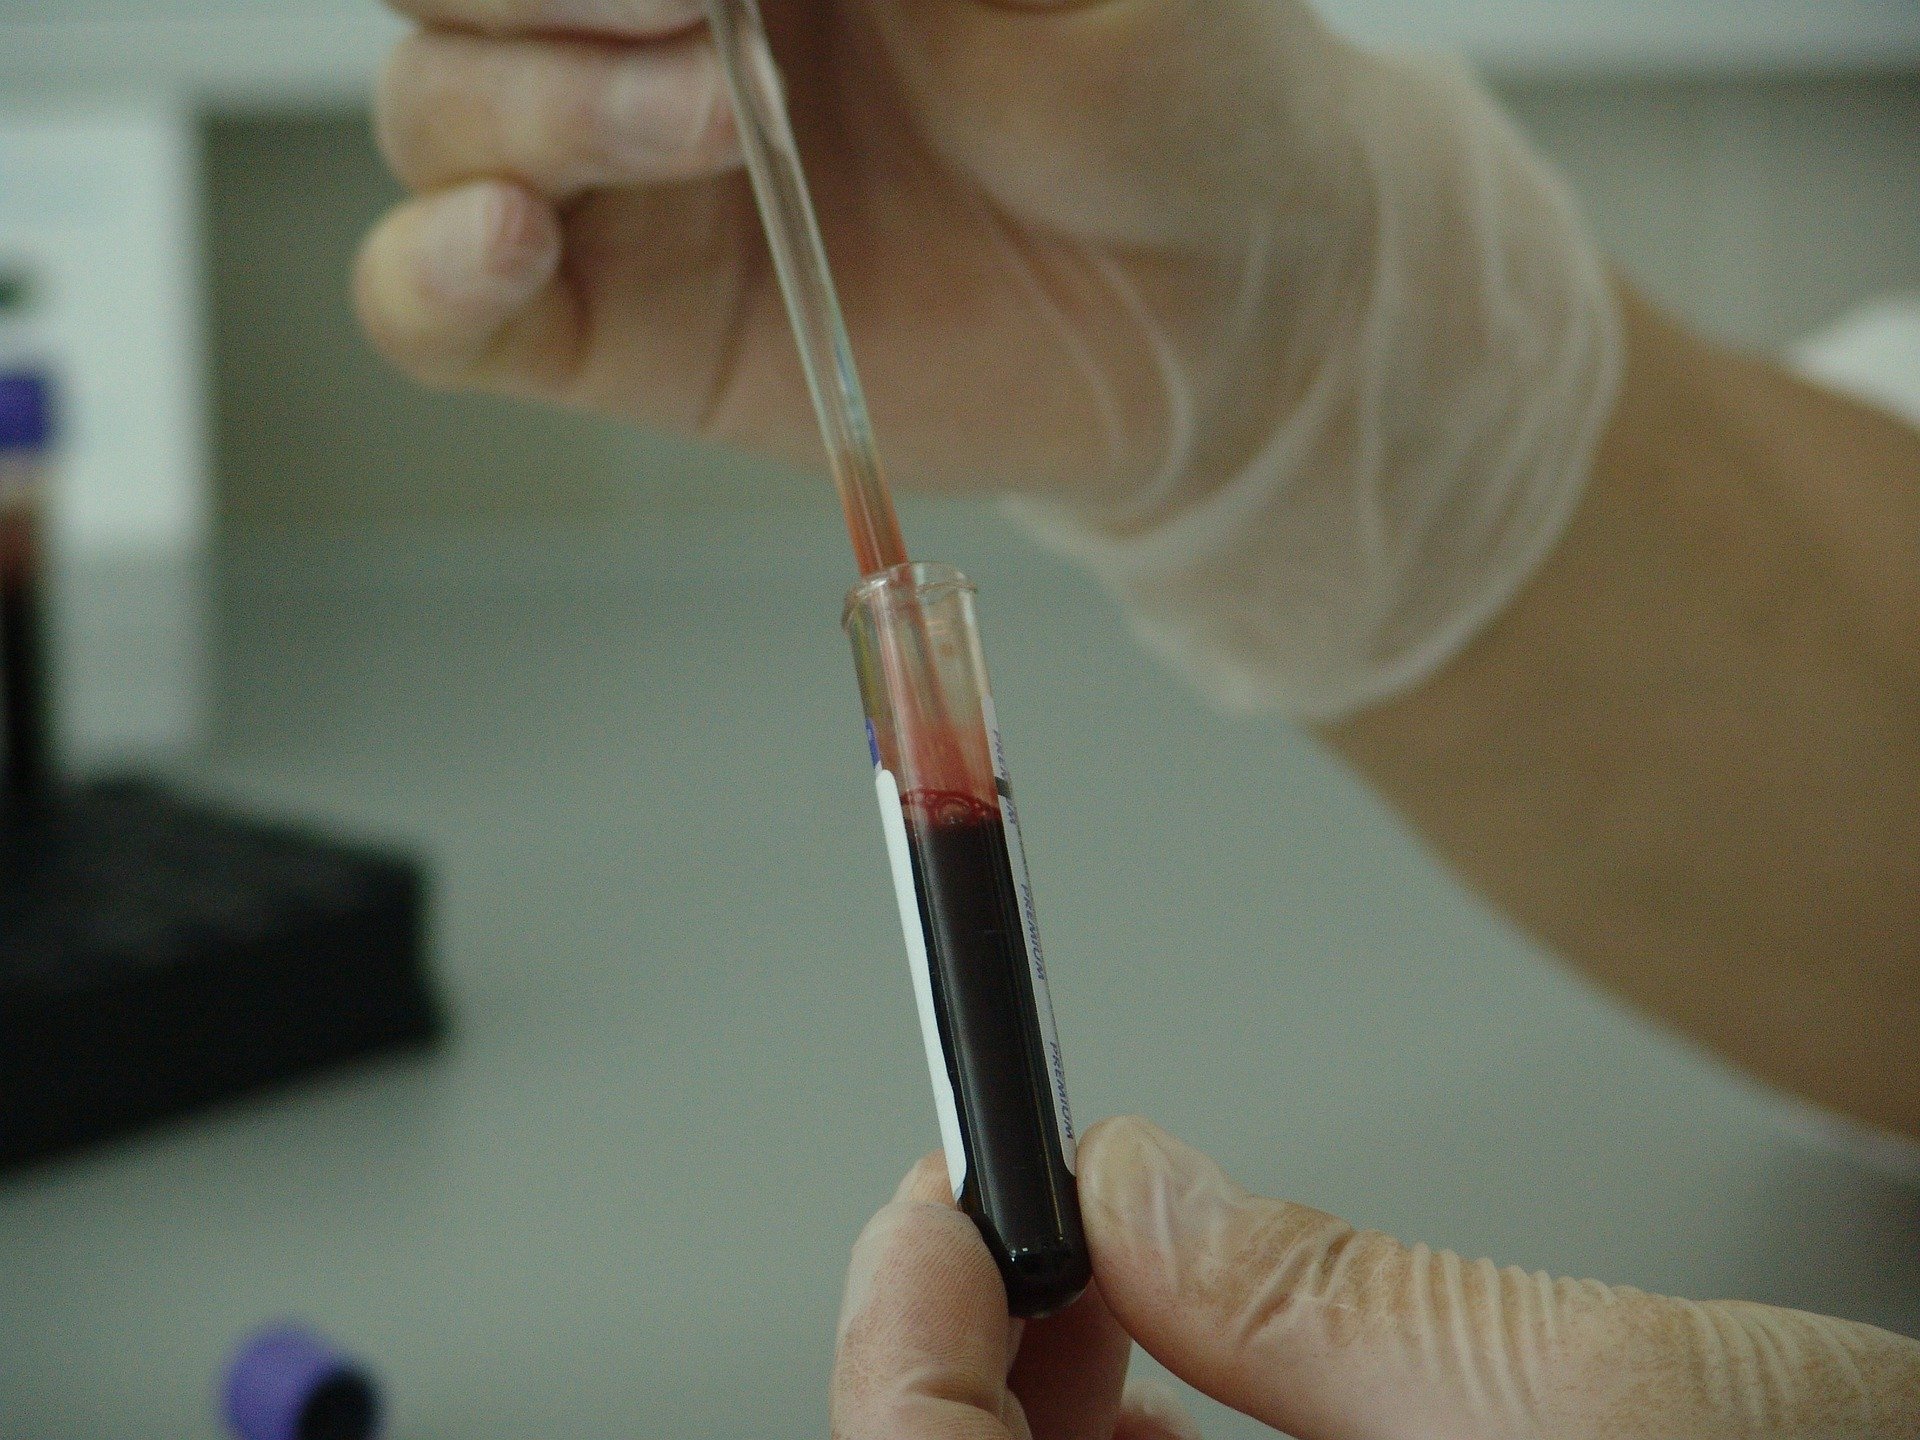 HemostOD will make platelets on demand